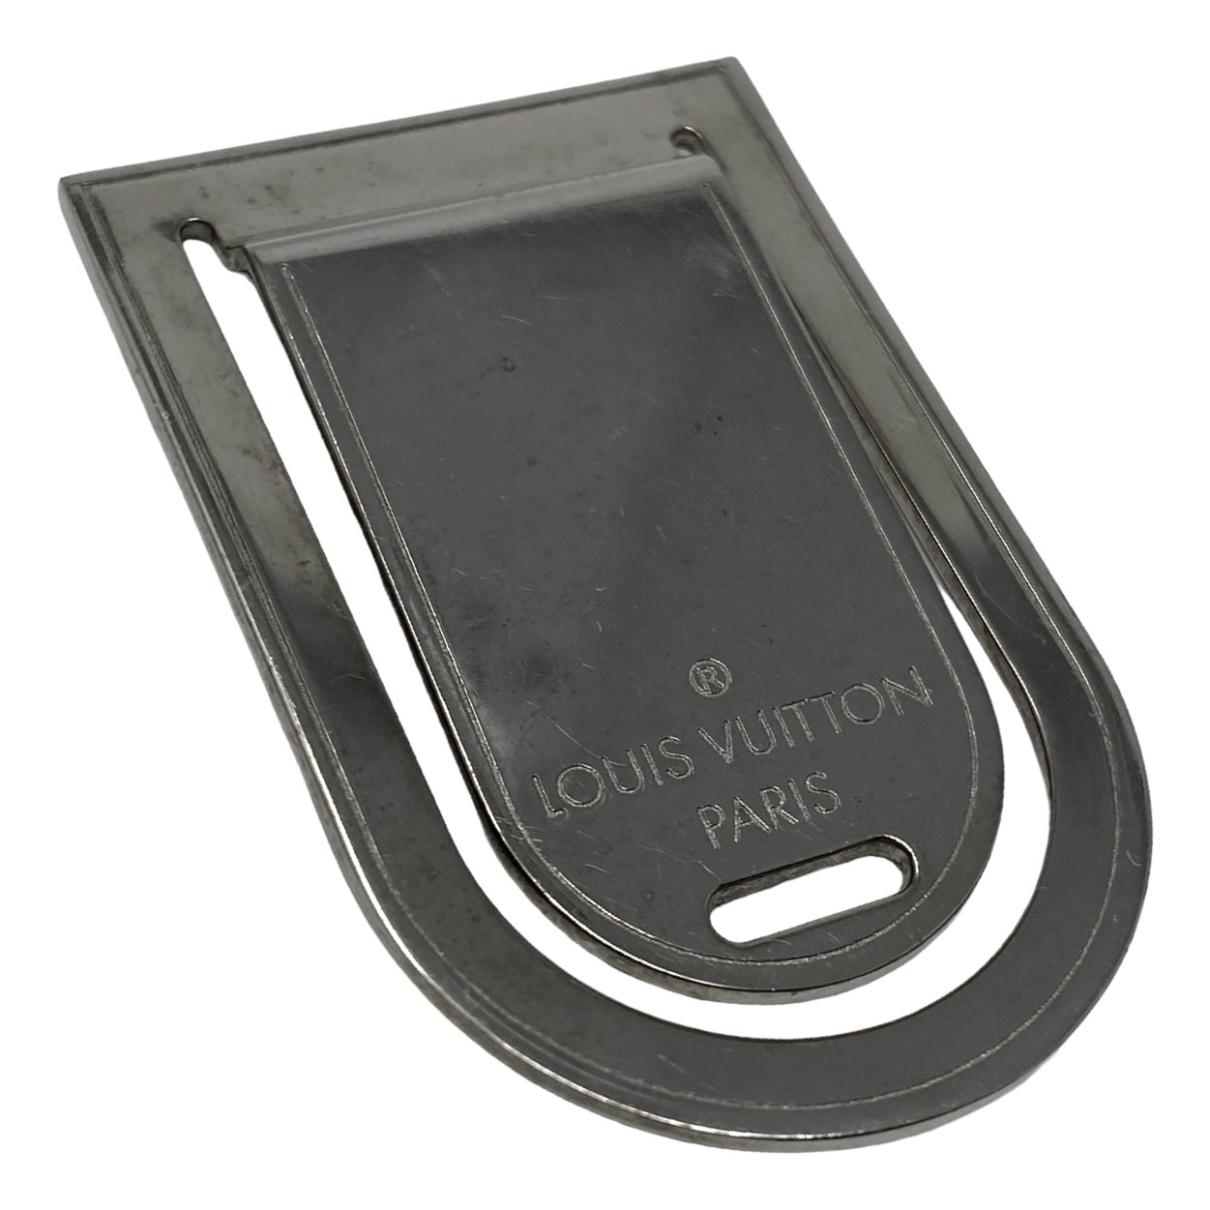 Small bag Louis Vuitton Silver in Metal - 36350185